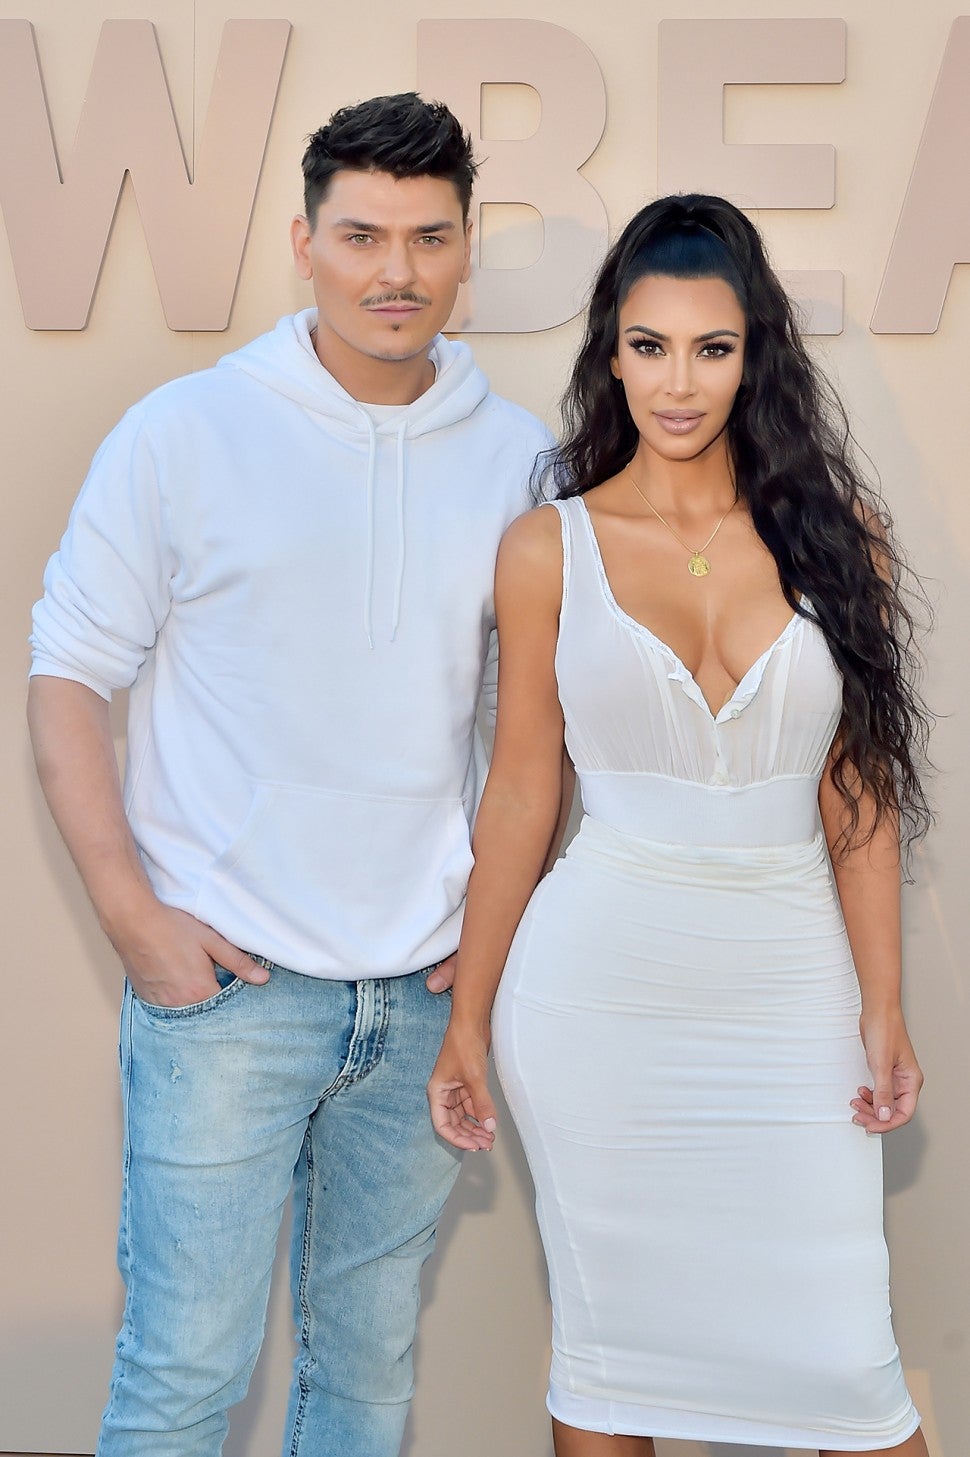 Mario Dedivanovic and Kim Kardashian